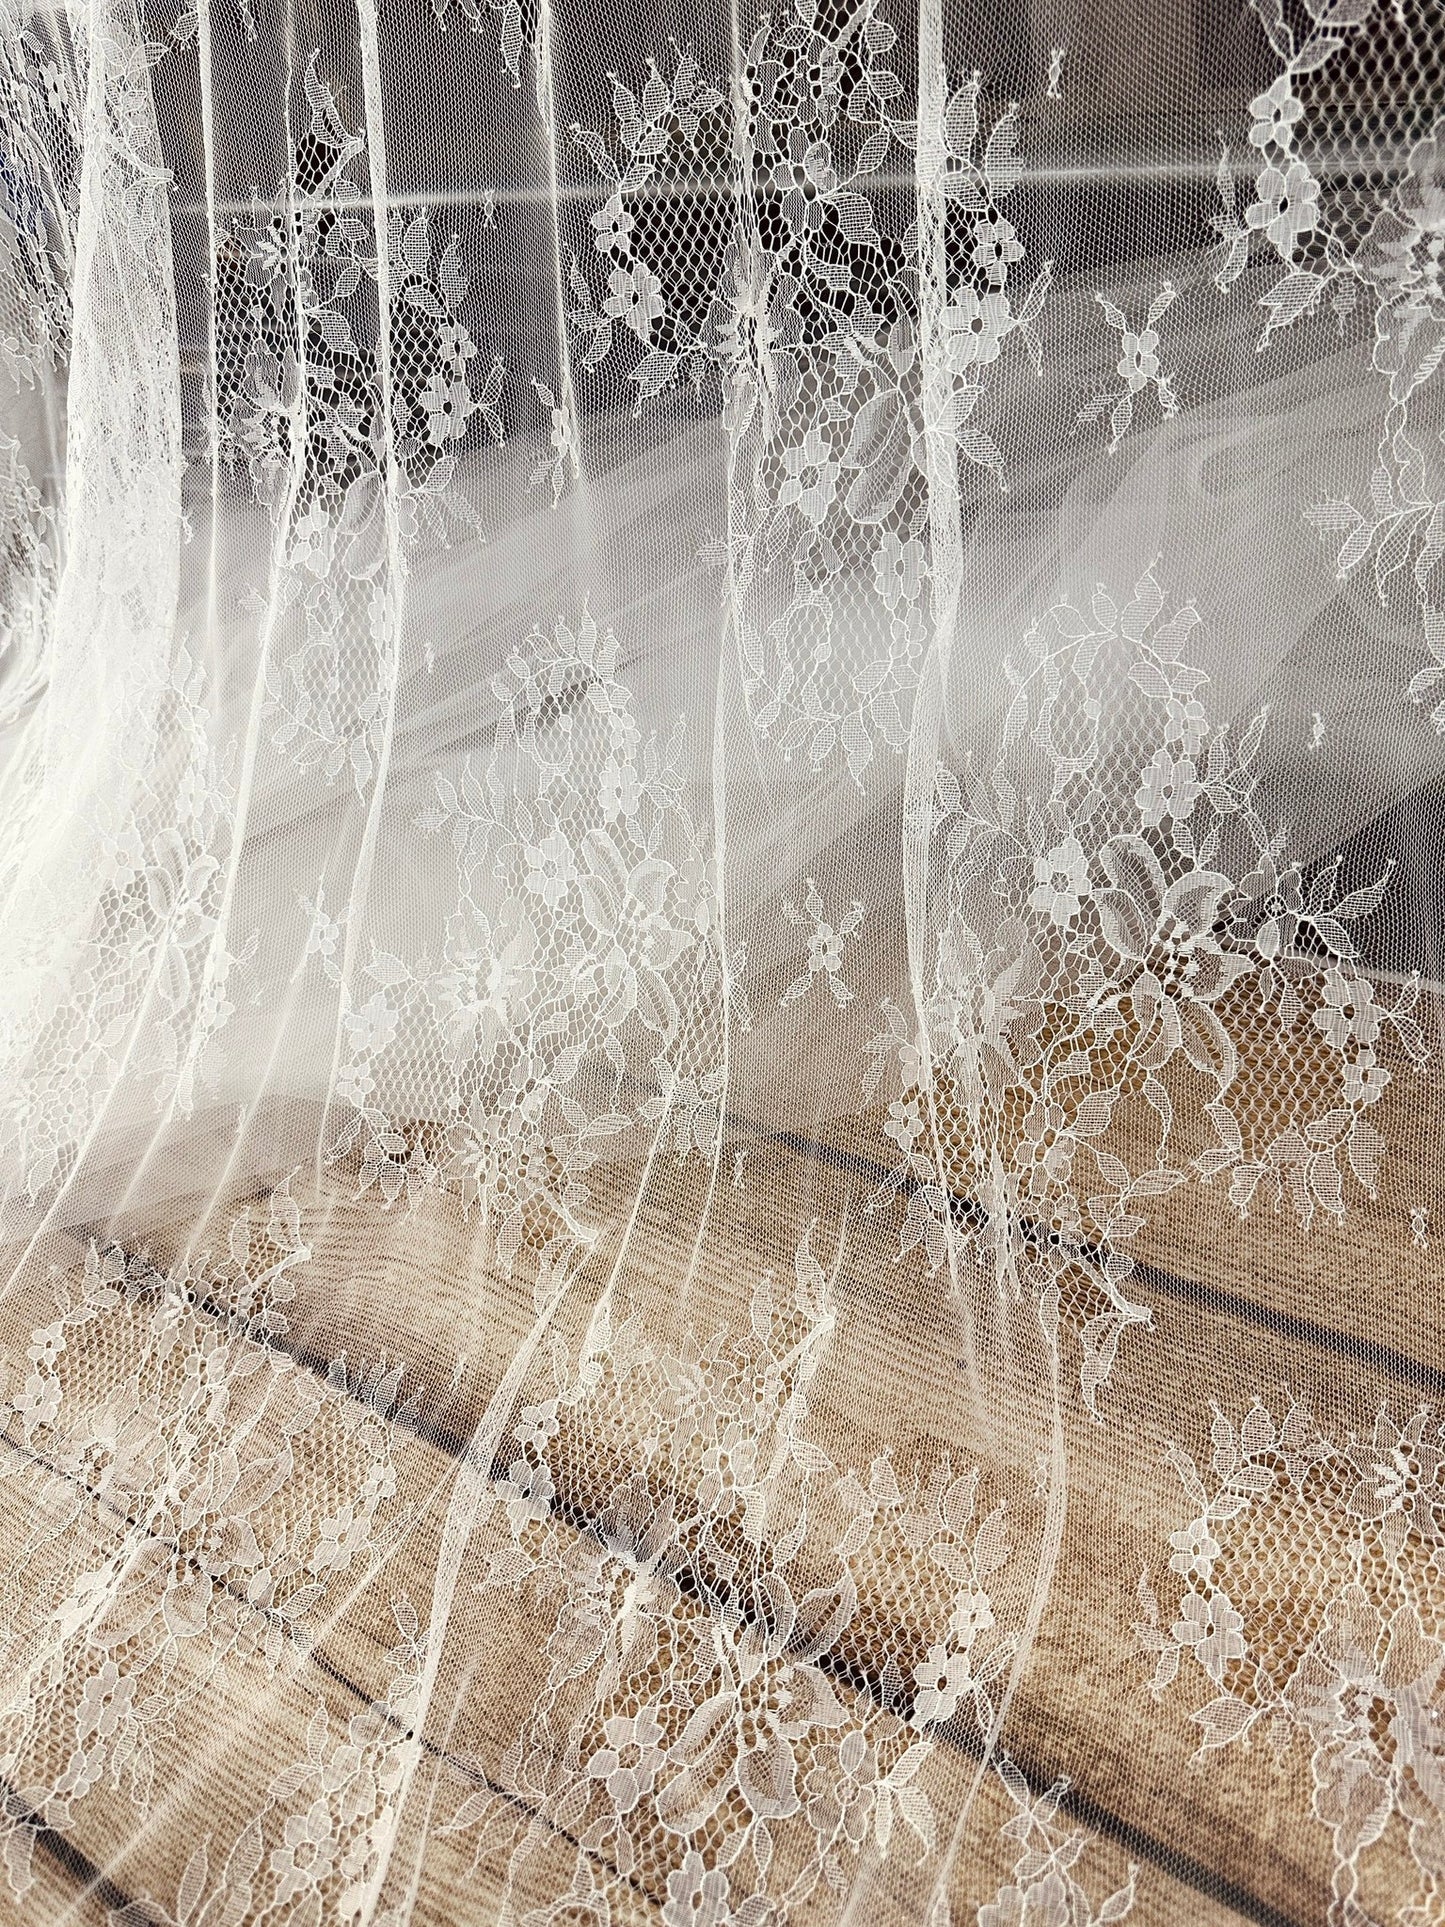 Floral lace mermaid wedding dress,Sleeveless corset wedding dress